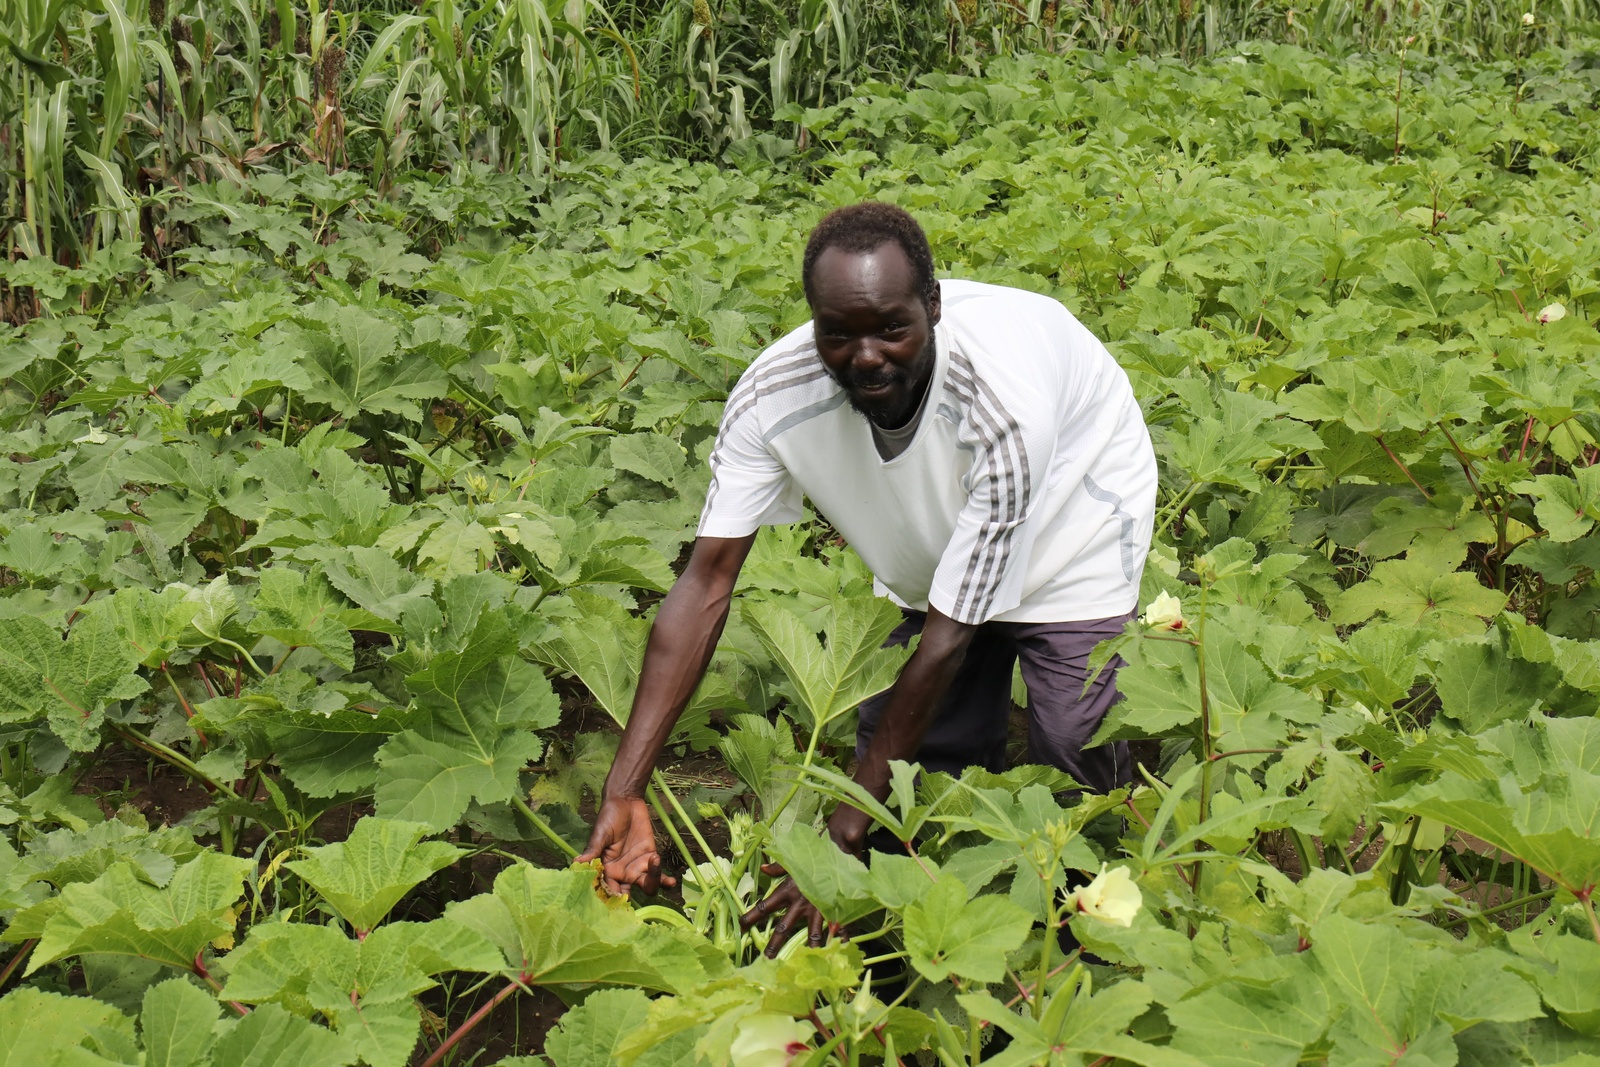 South Sudan - Farming helping refugees thrive